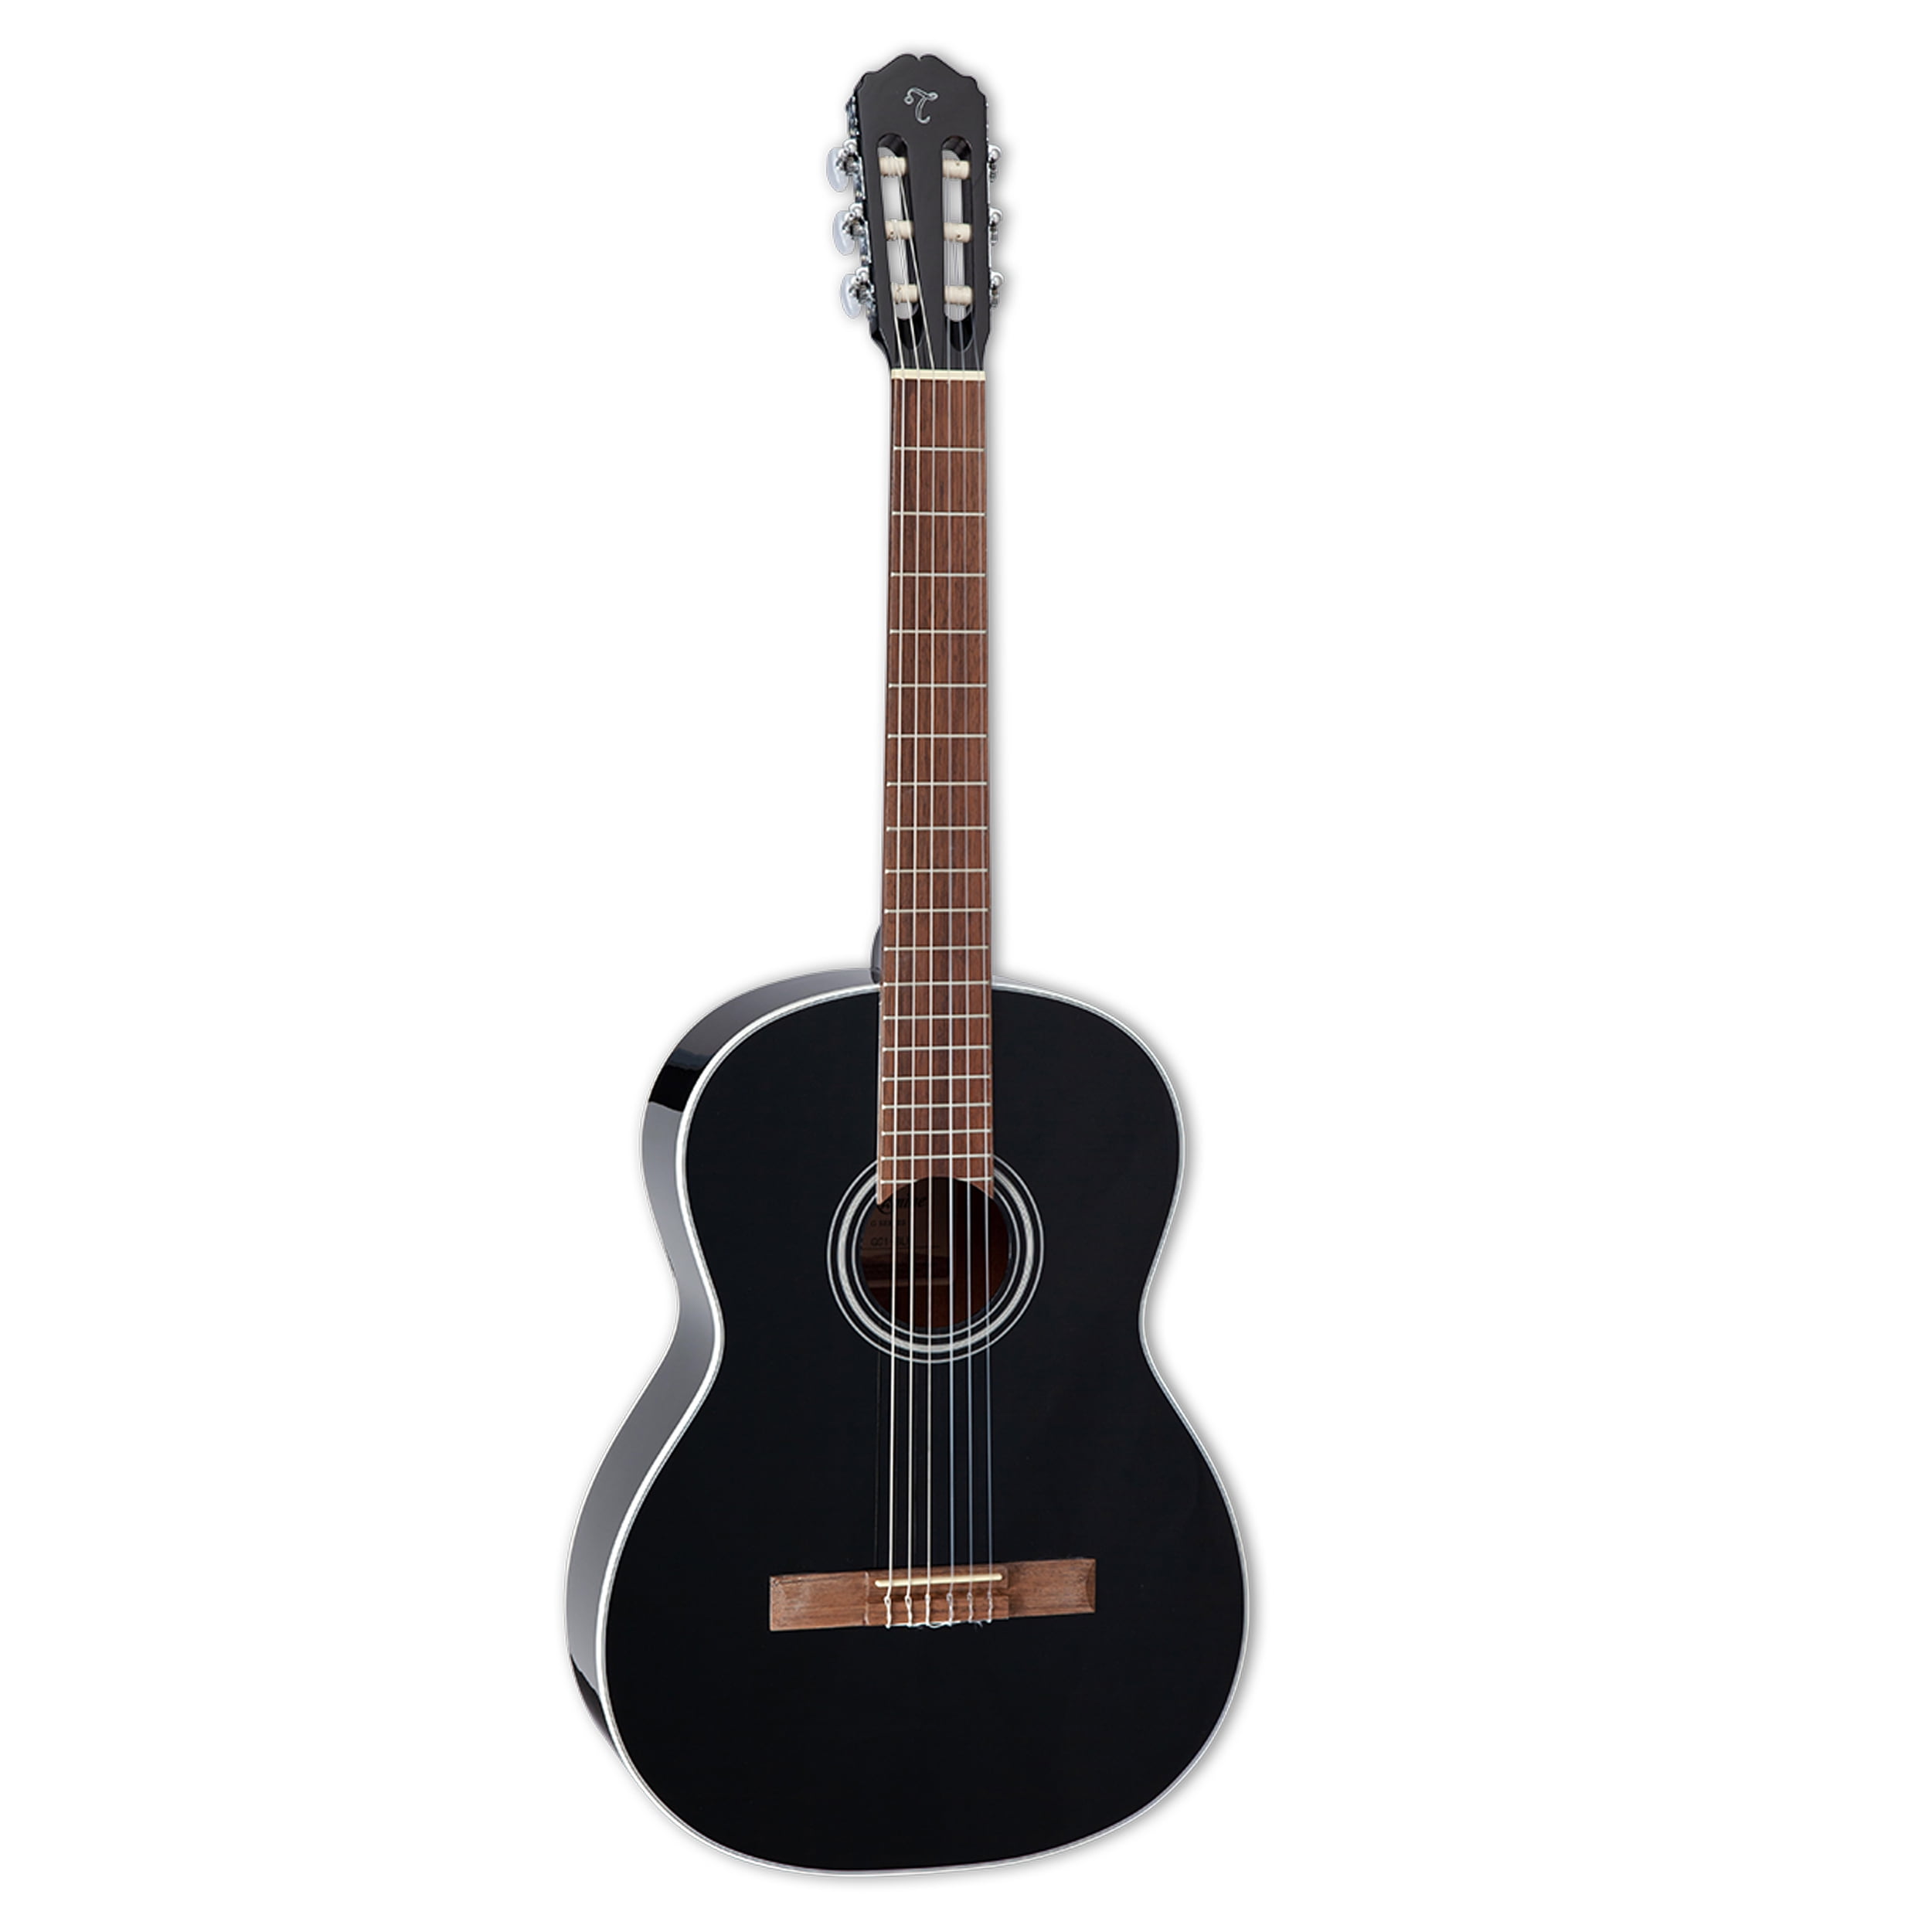 Mini Gibson Acoustic